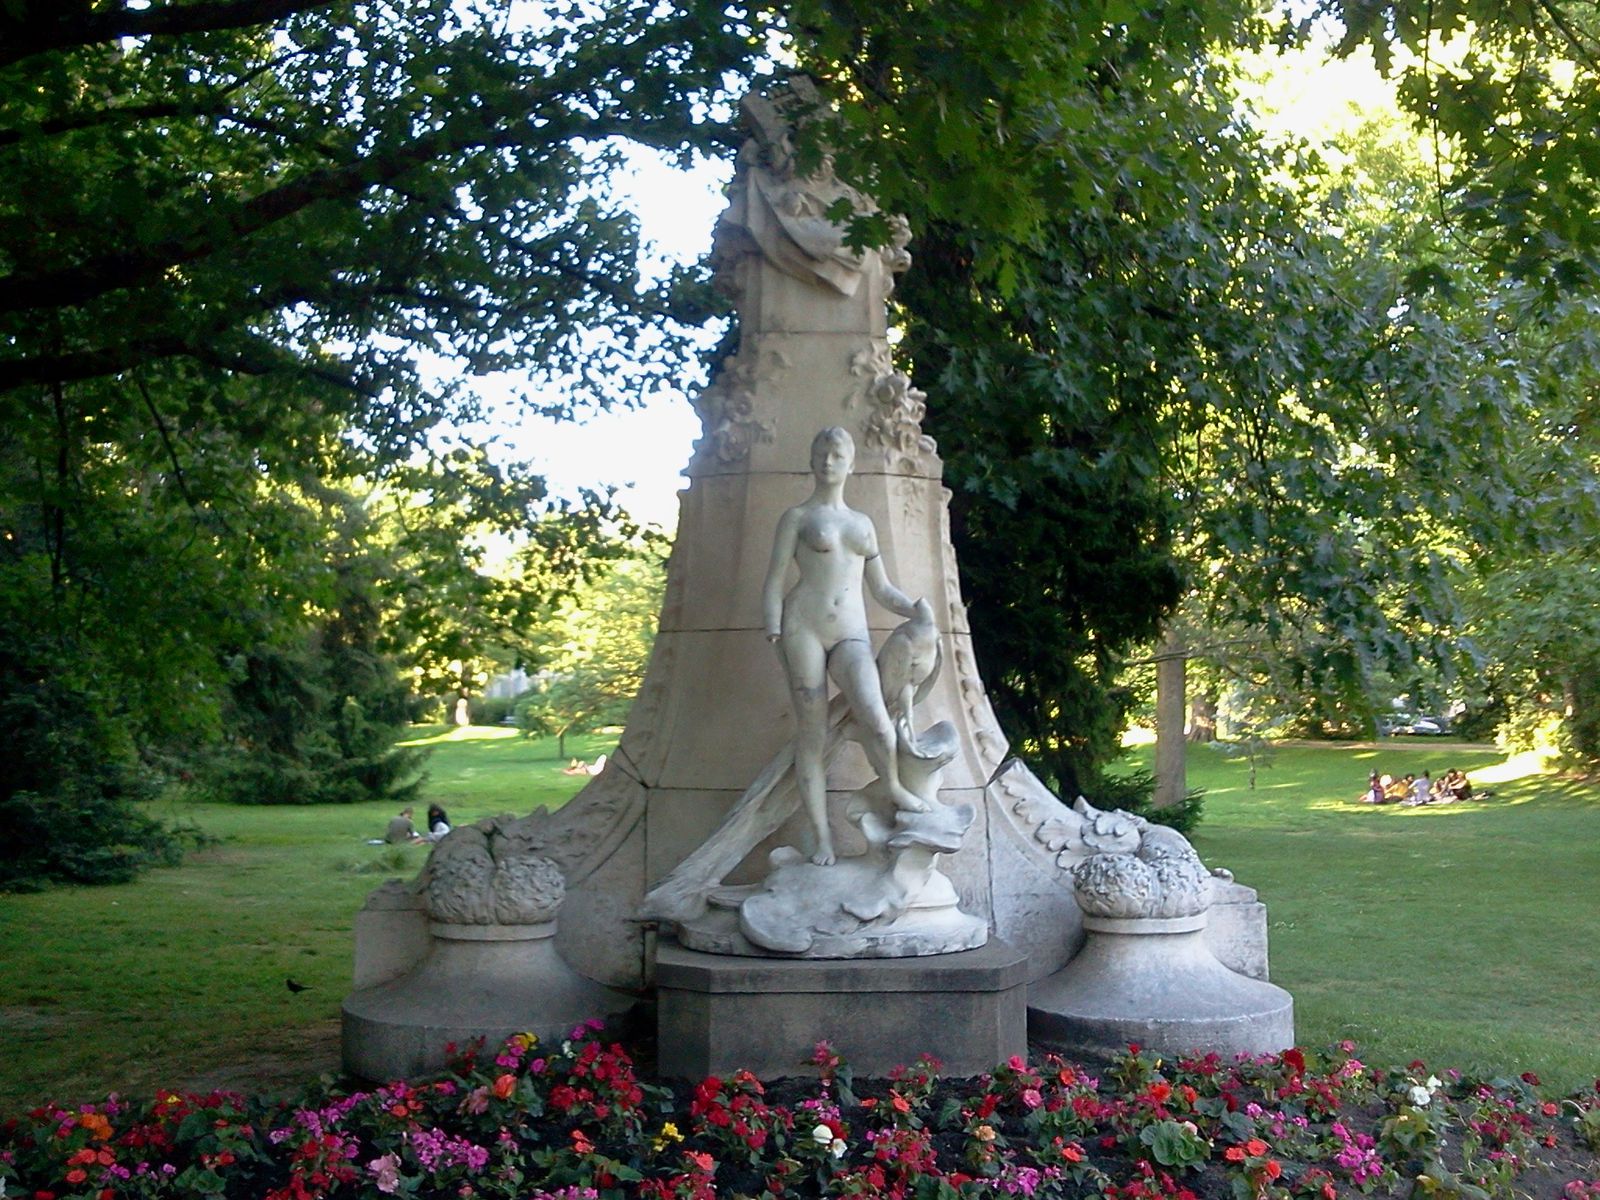 http://a134.idata.over-blog.com/1/37/44/14/photo/statues-jardin-des-plantes/2011-05-25-19.40.17.jpg